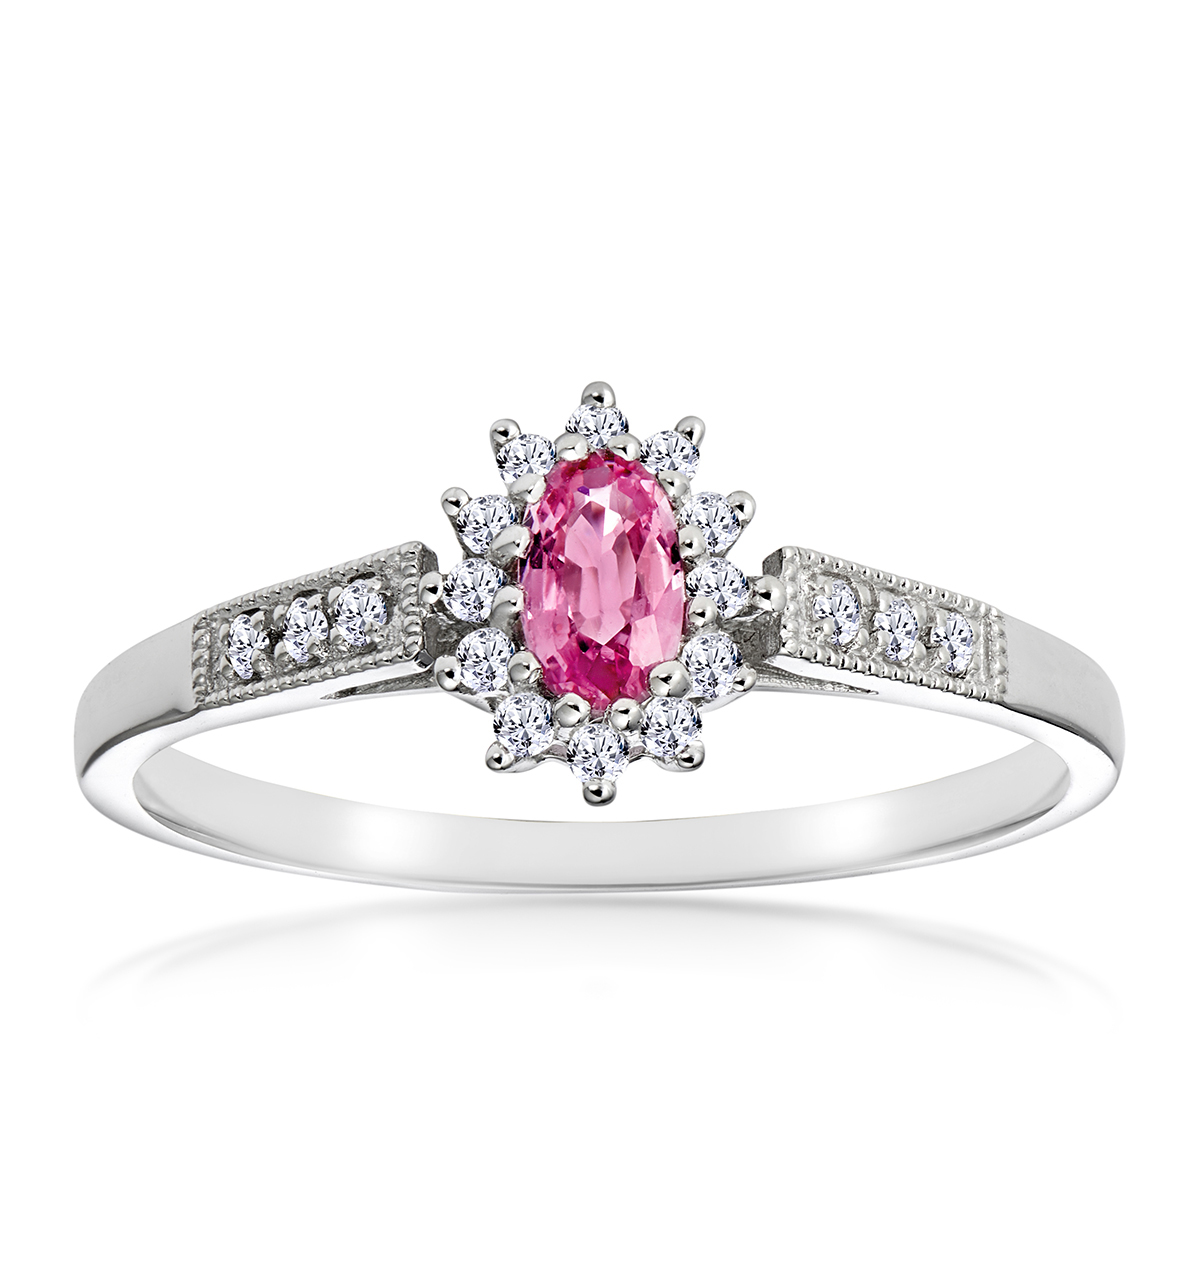 Pink Sapphire Rings | The Diamond Store